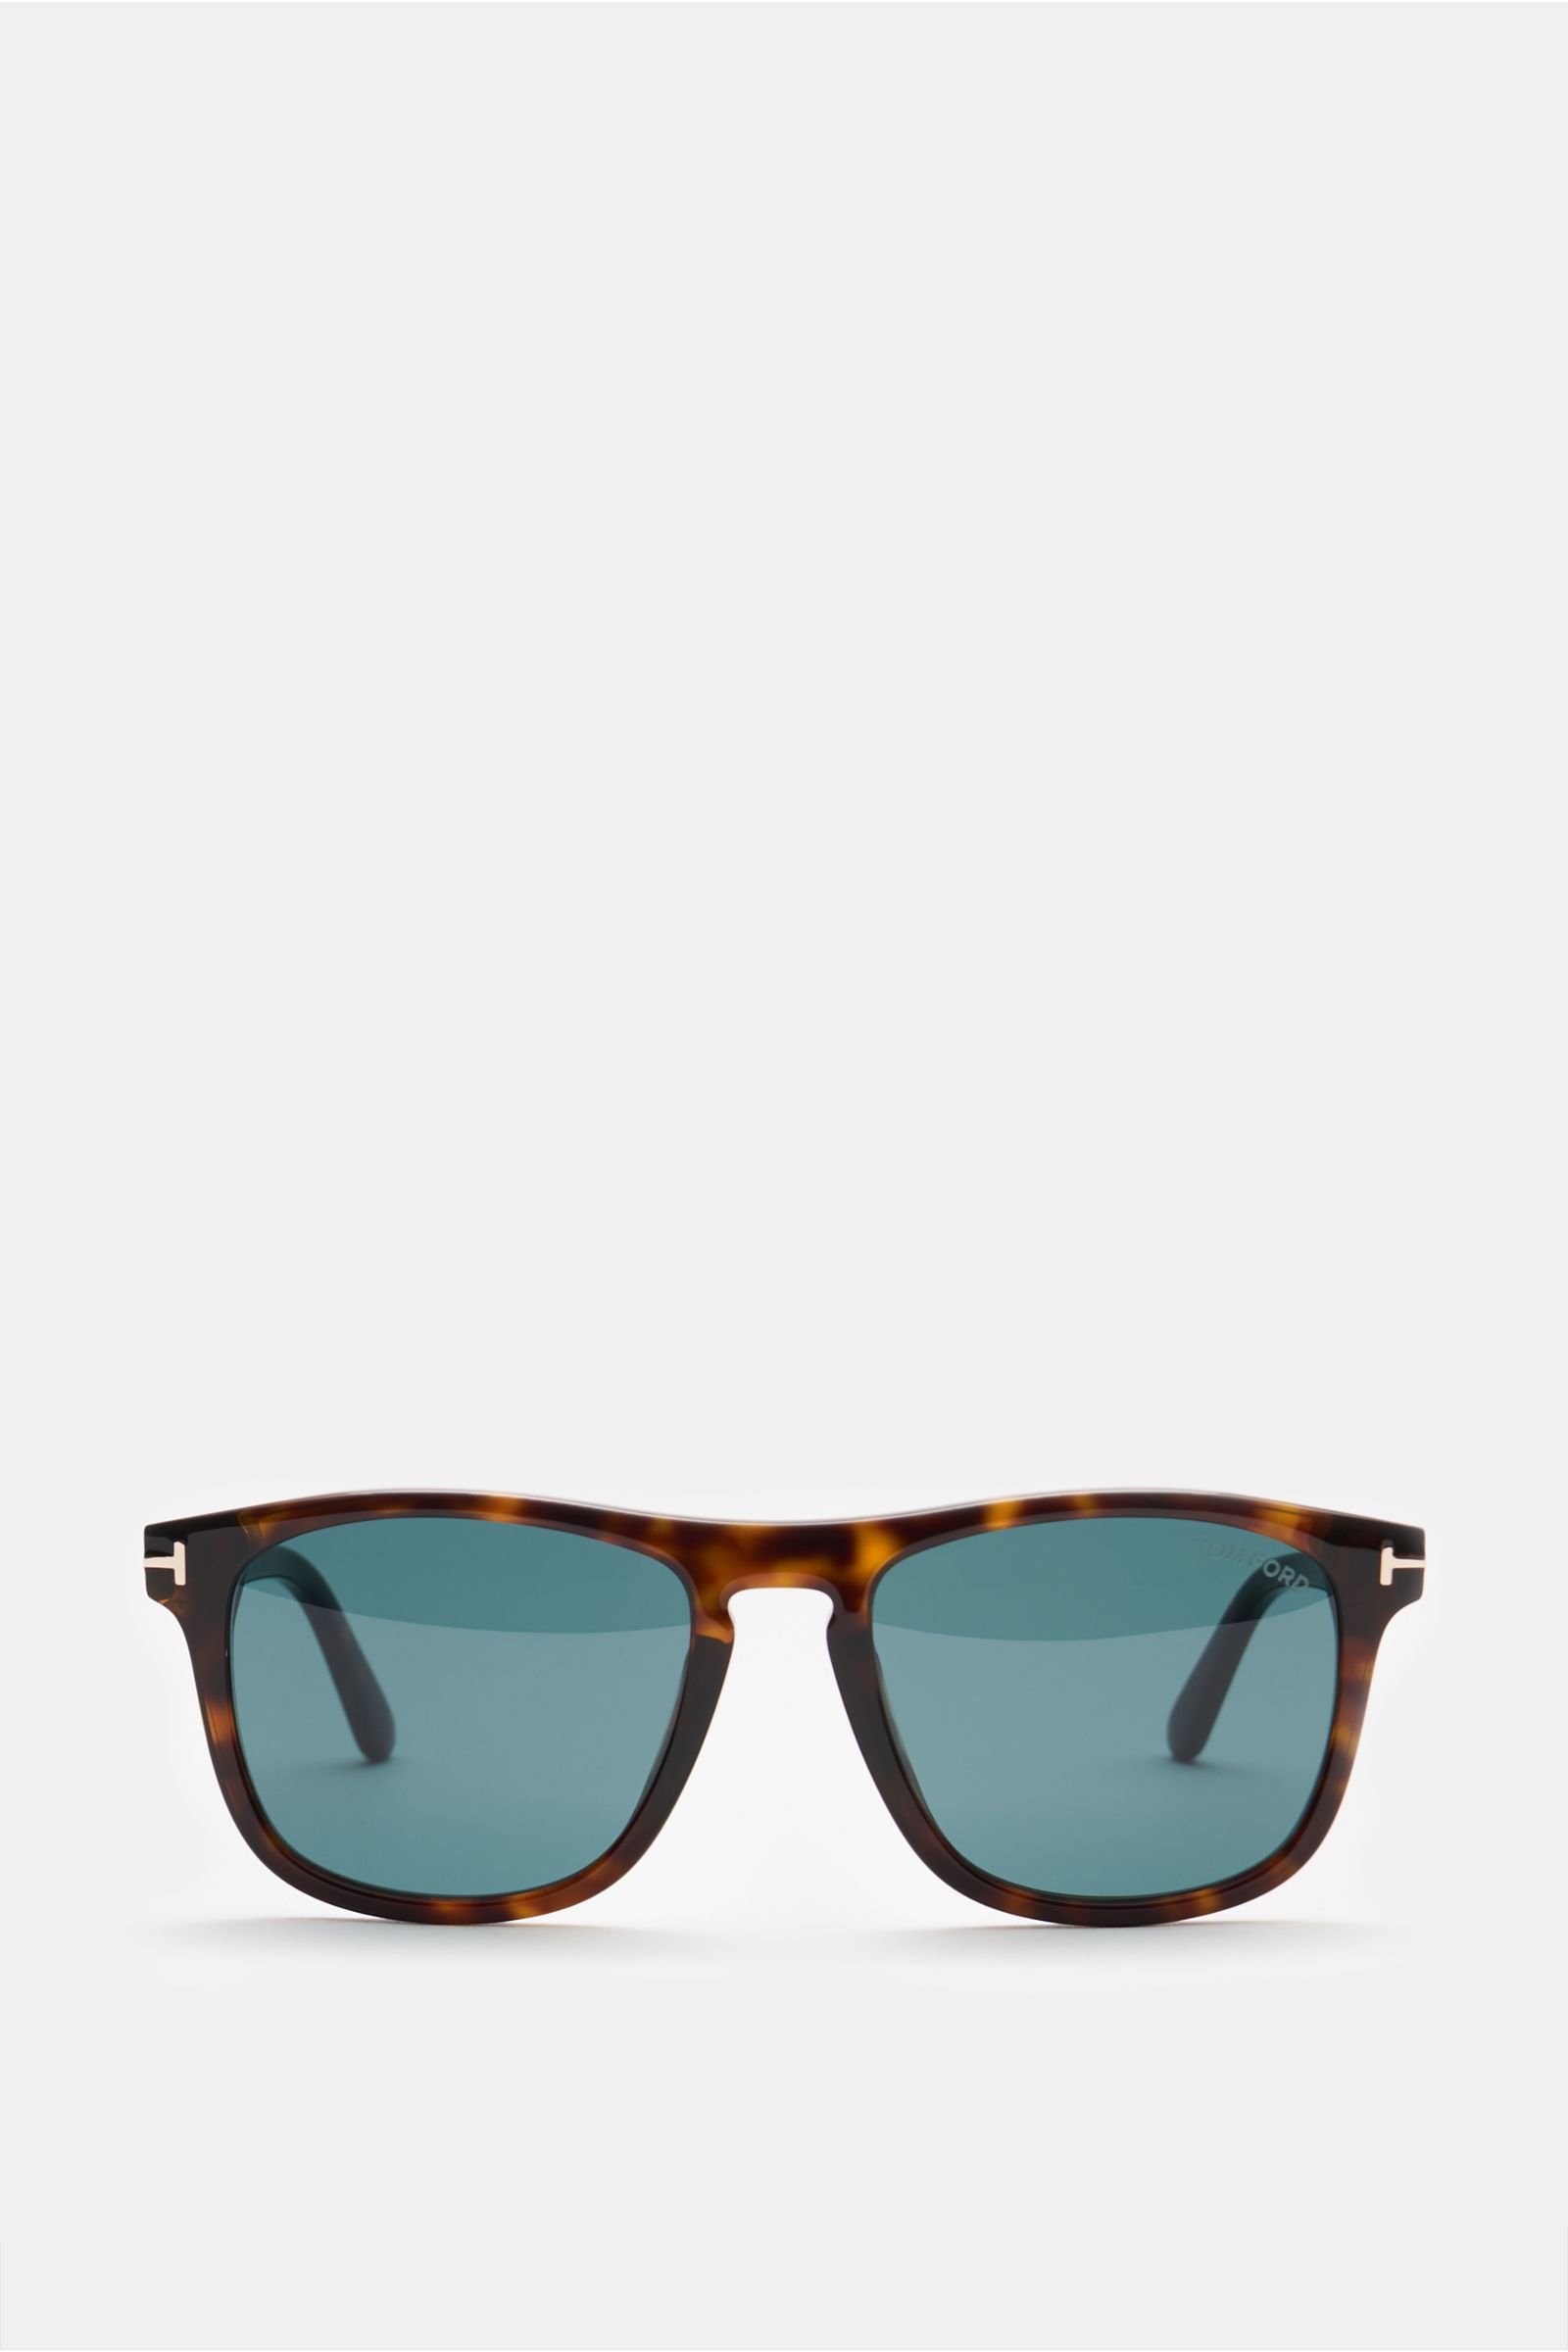 Sunglasses 'Gerard' dark brown patterned/grey